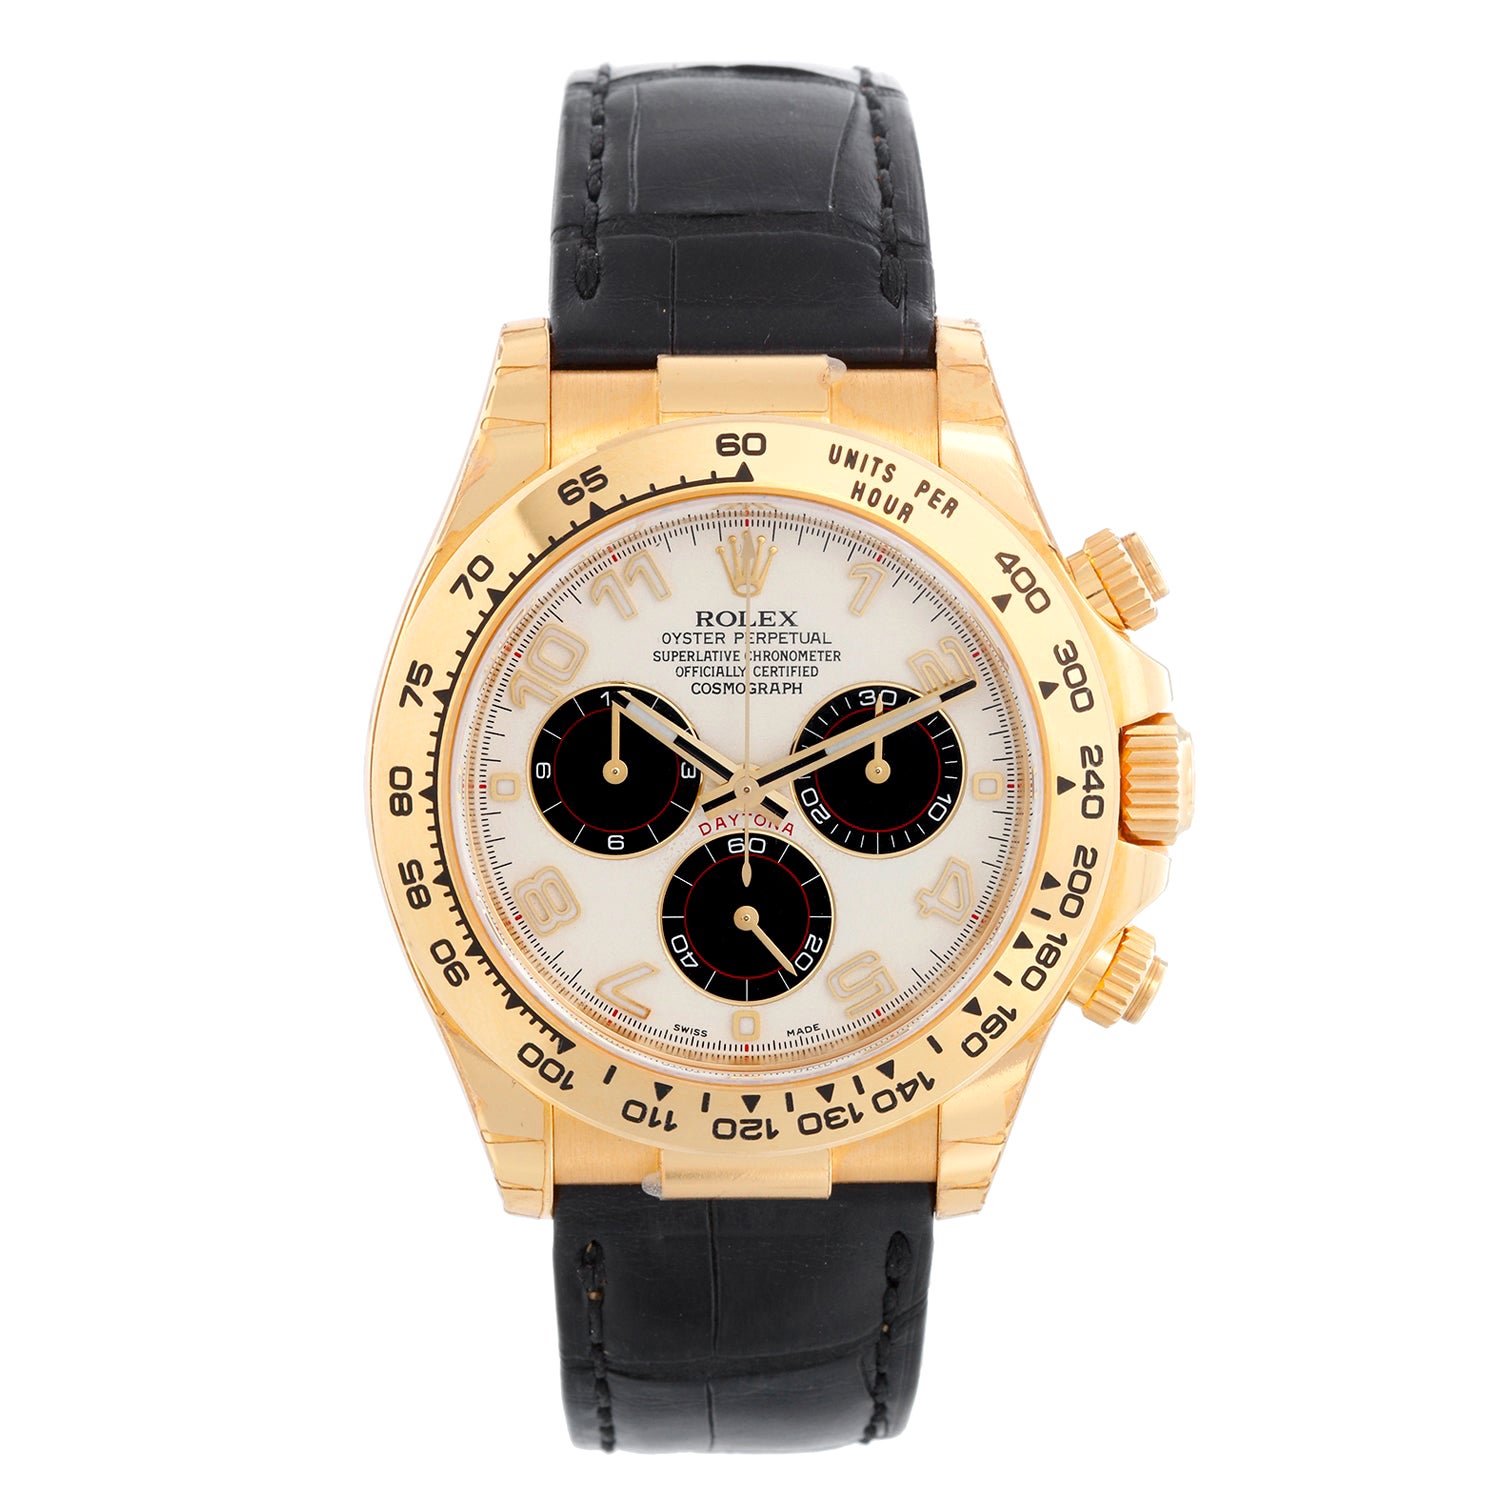 Rolex Cosmograph Daytona Men's 18k Yellow Gold Watch 116518